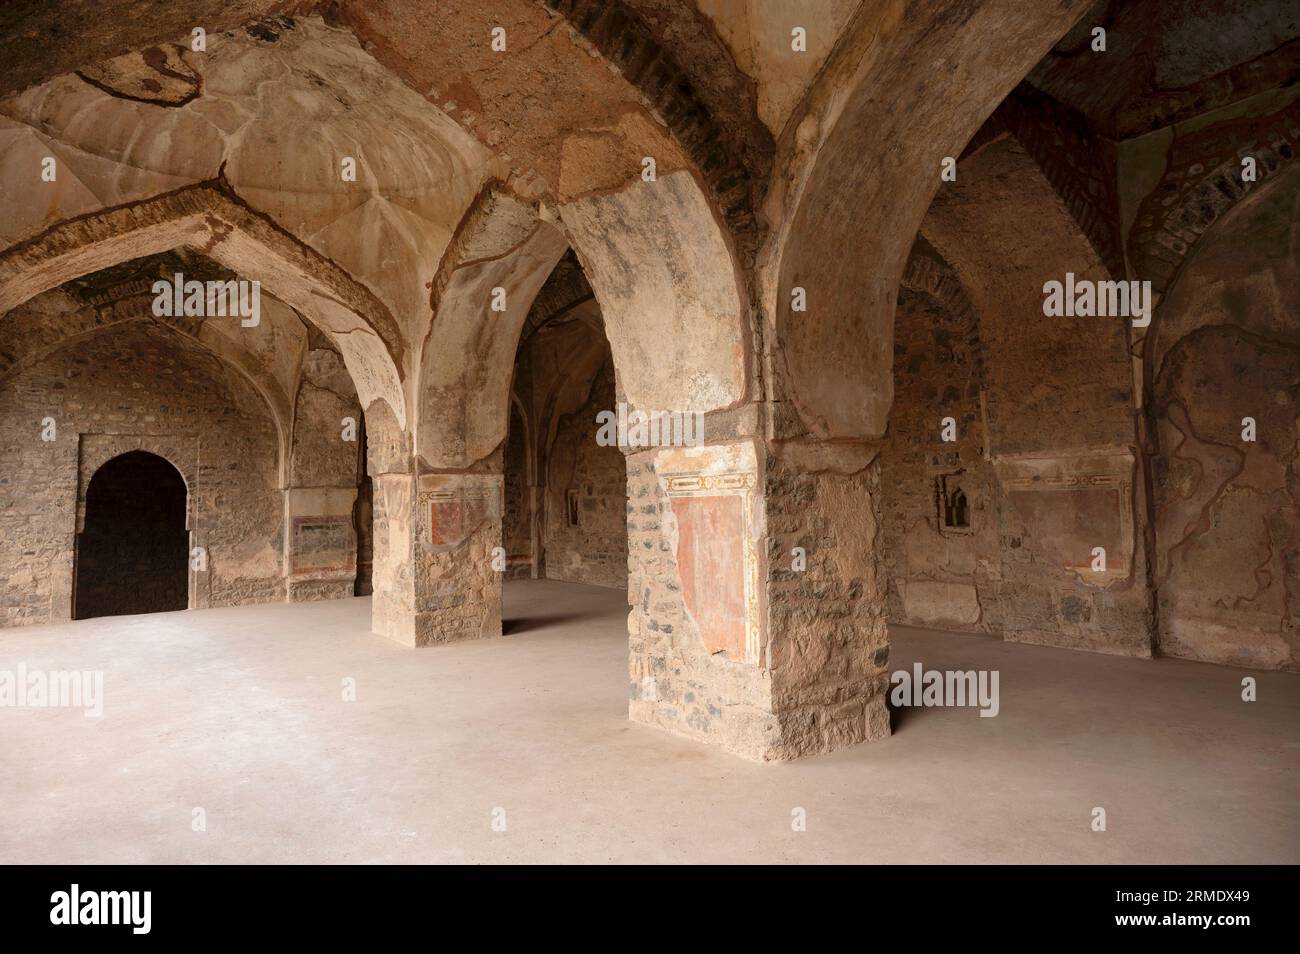 Interiors of Nahar Jharokha, situated in the fort, built by Sultan Ghiyasuddin Khilji, Mandu, Madhya Pradesh, India Stock Photo